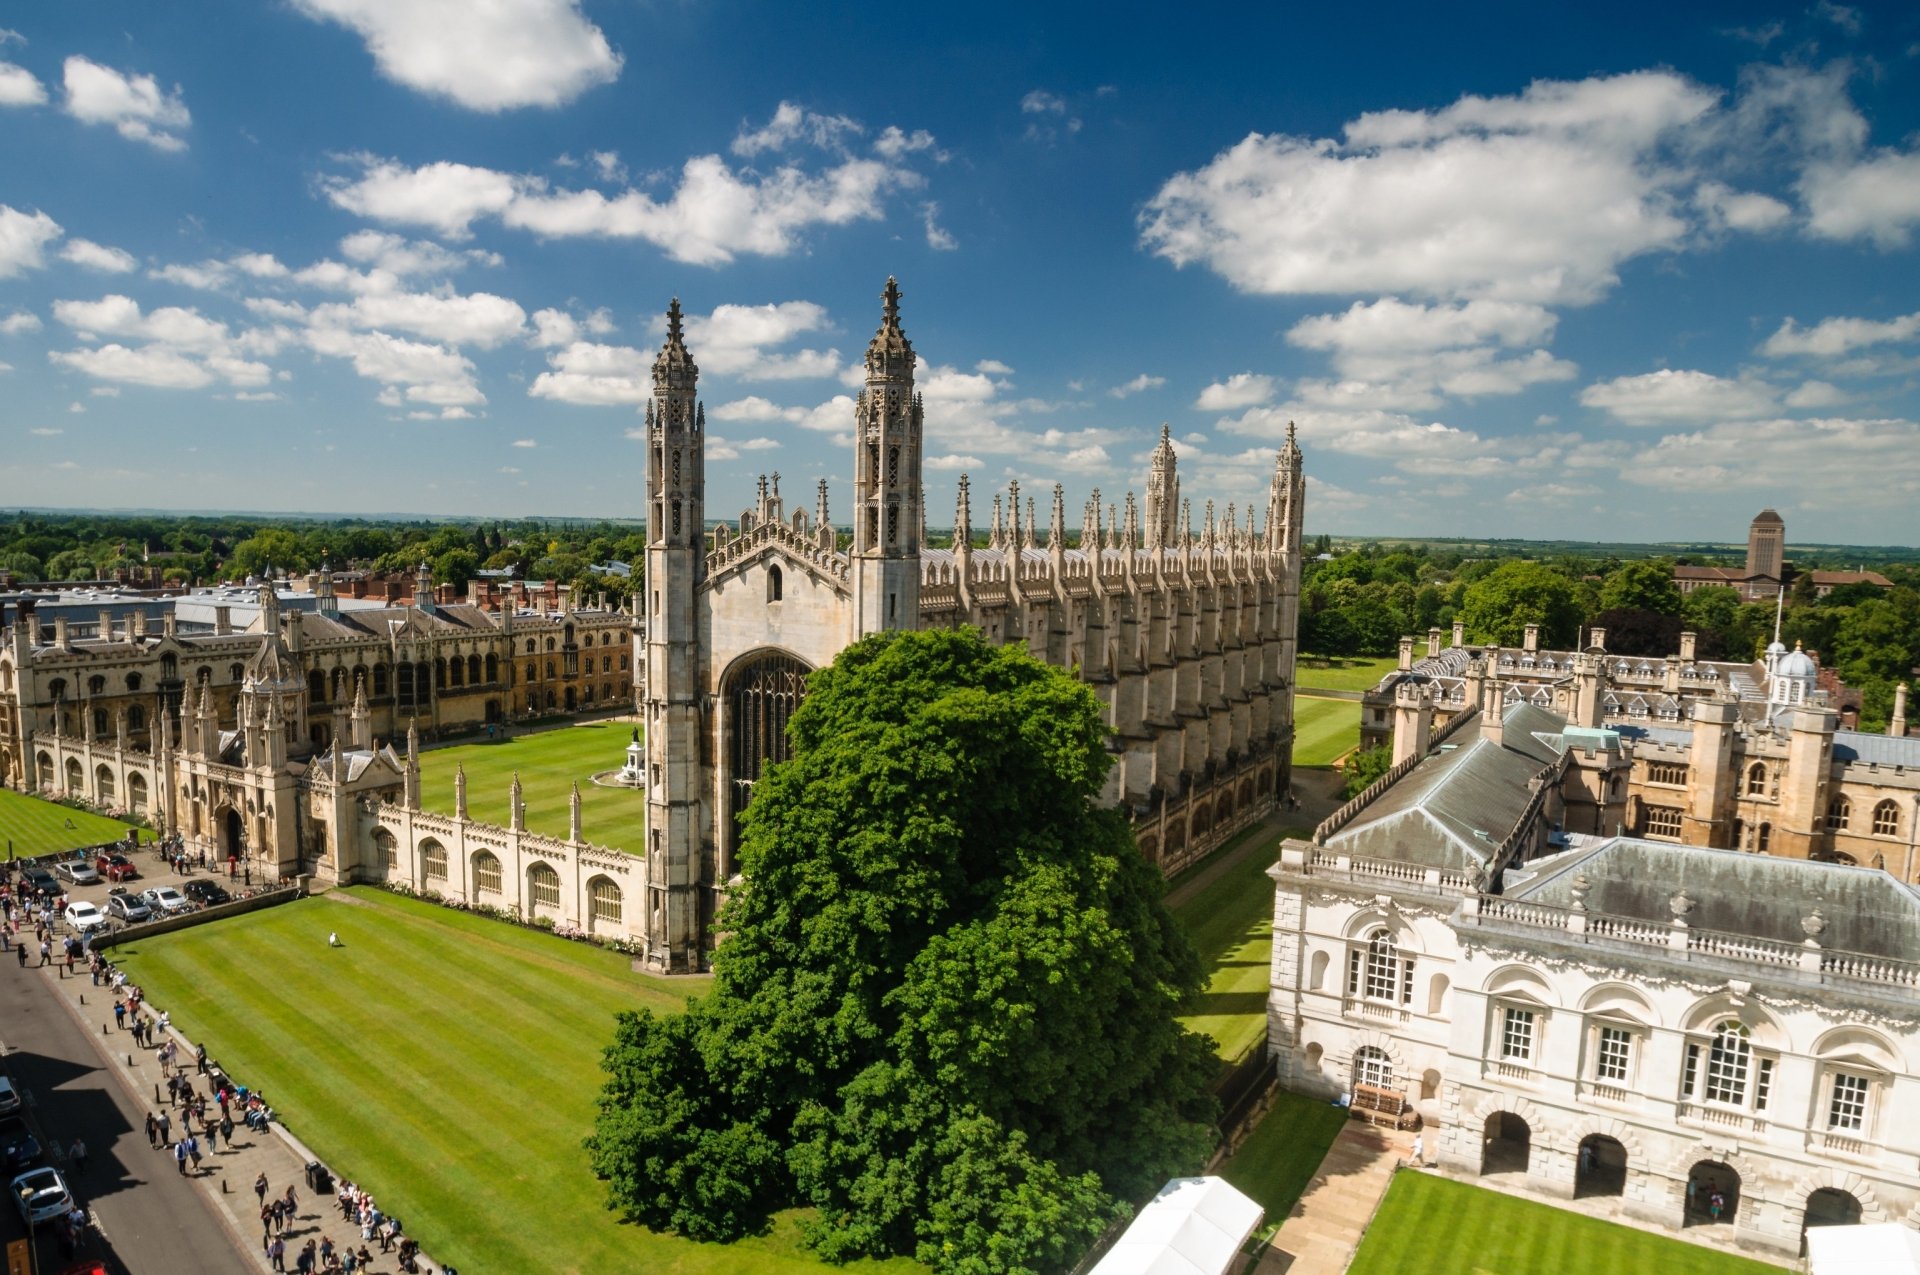 Kings College Chapel In Cambridge England